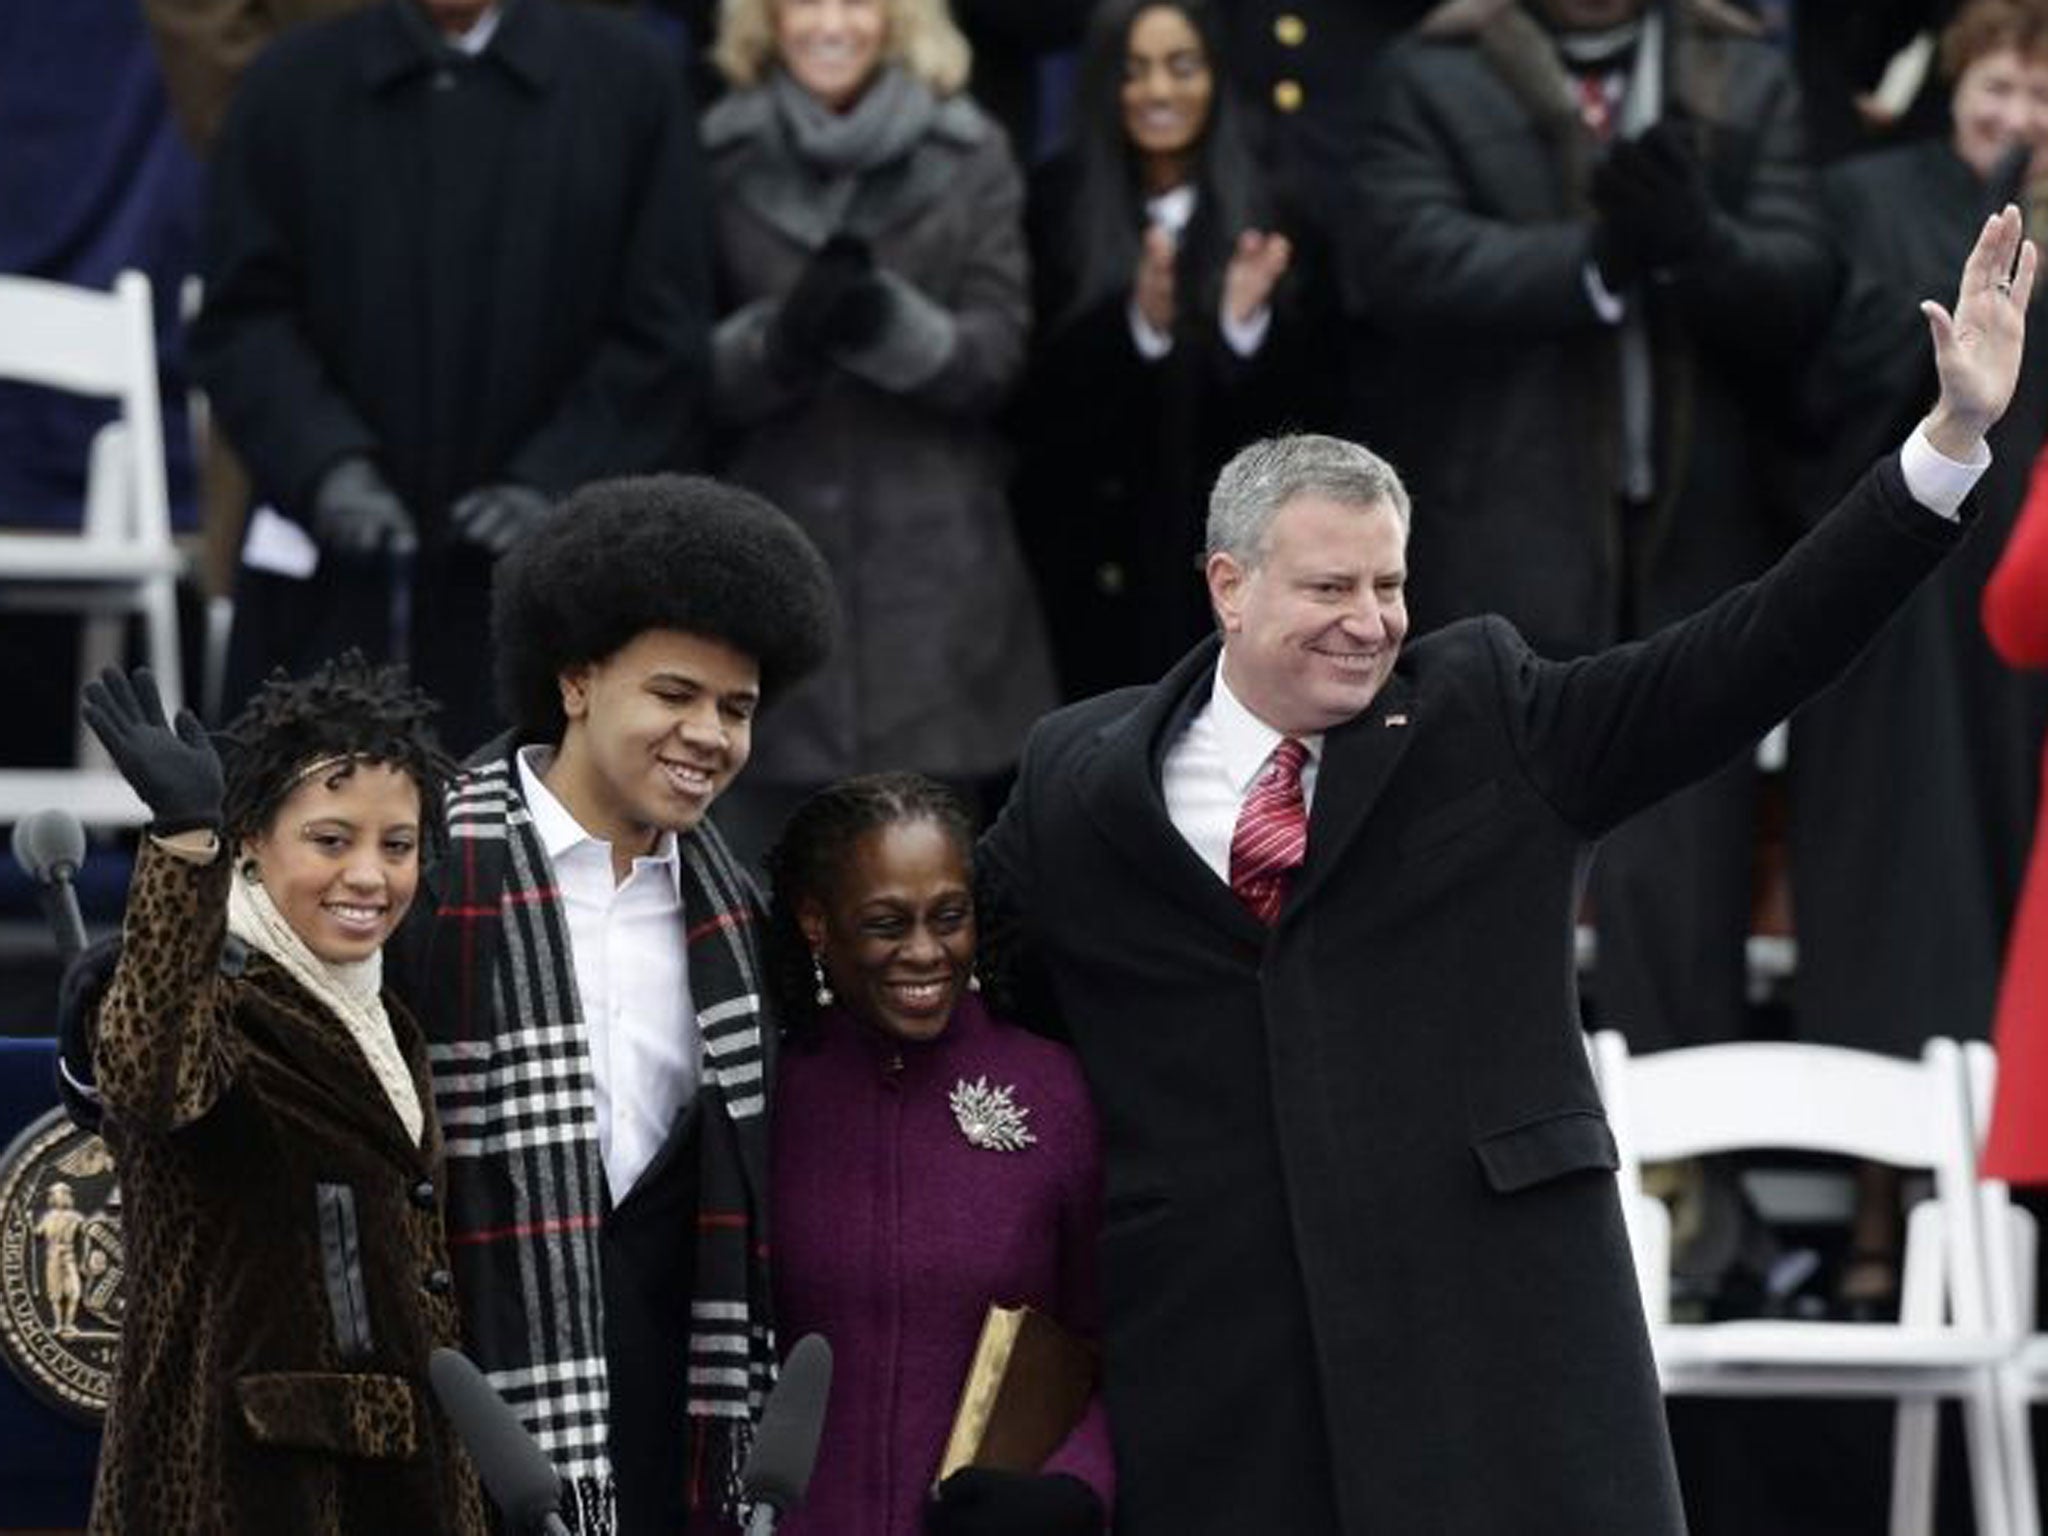 Bill de Blasio and his family at his inauguration as mayor